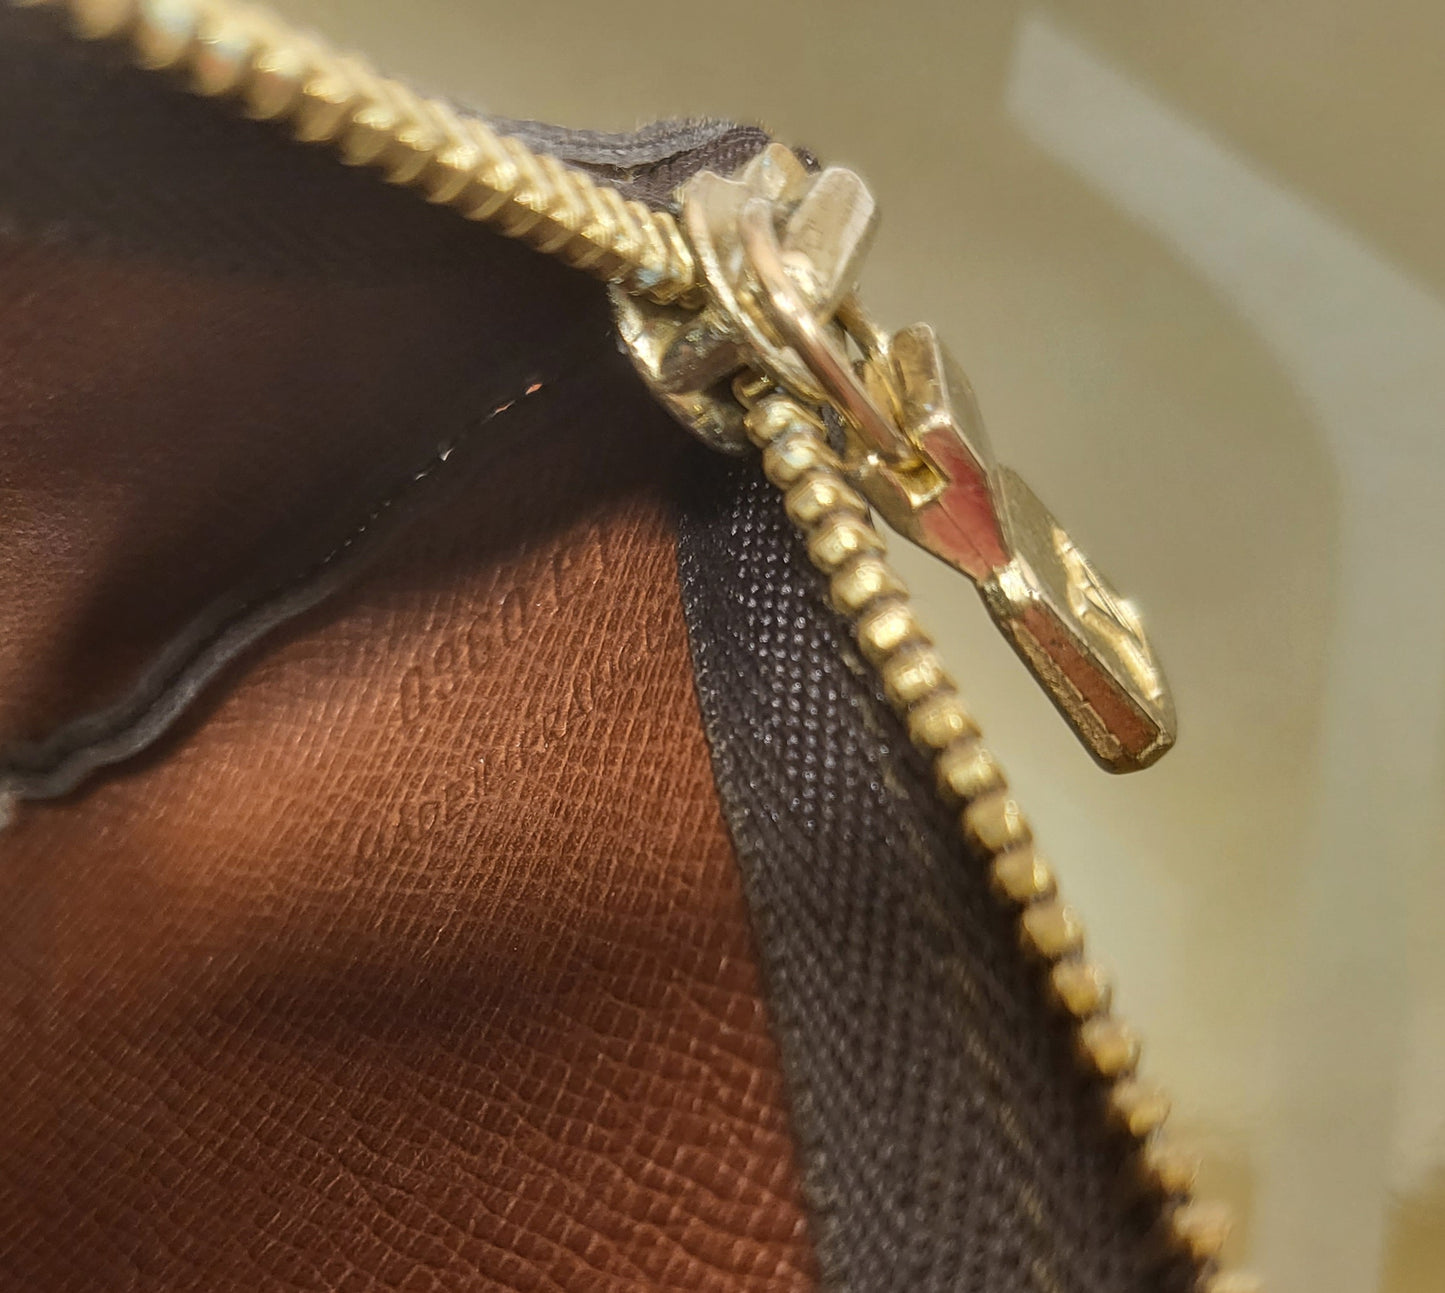 Authentic pre-owned Louis Vuitton Key cle pouch